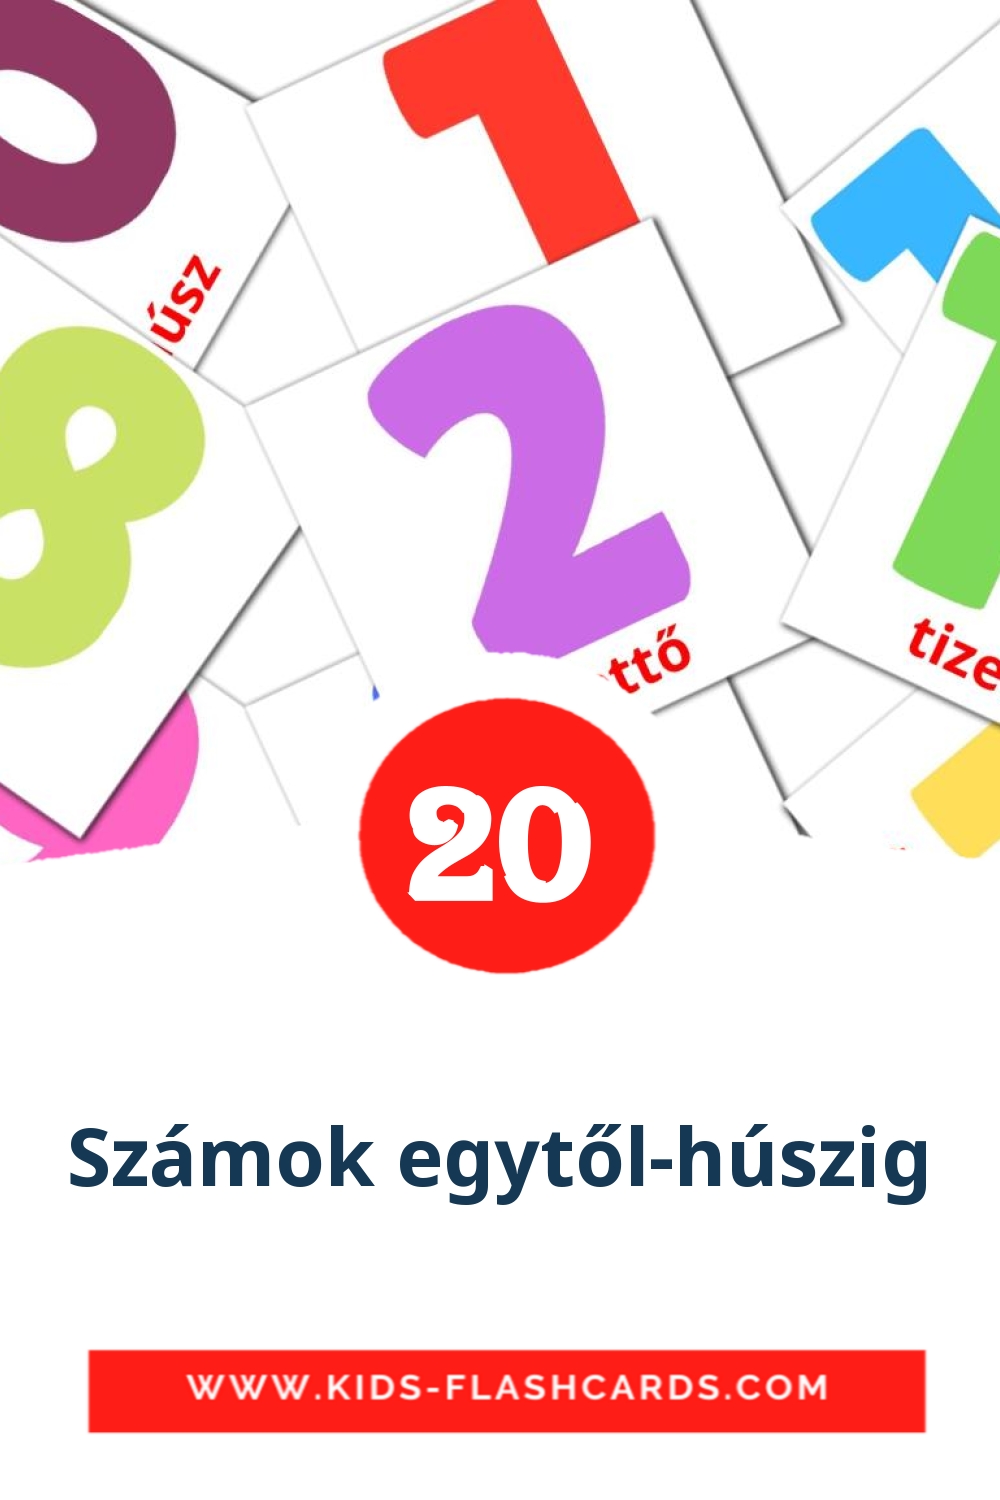 20 carte illustrate di Számok egytől-húszig per la scuola materna in ungherese